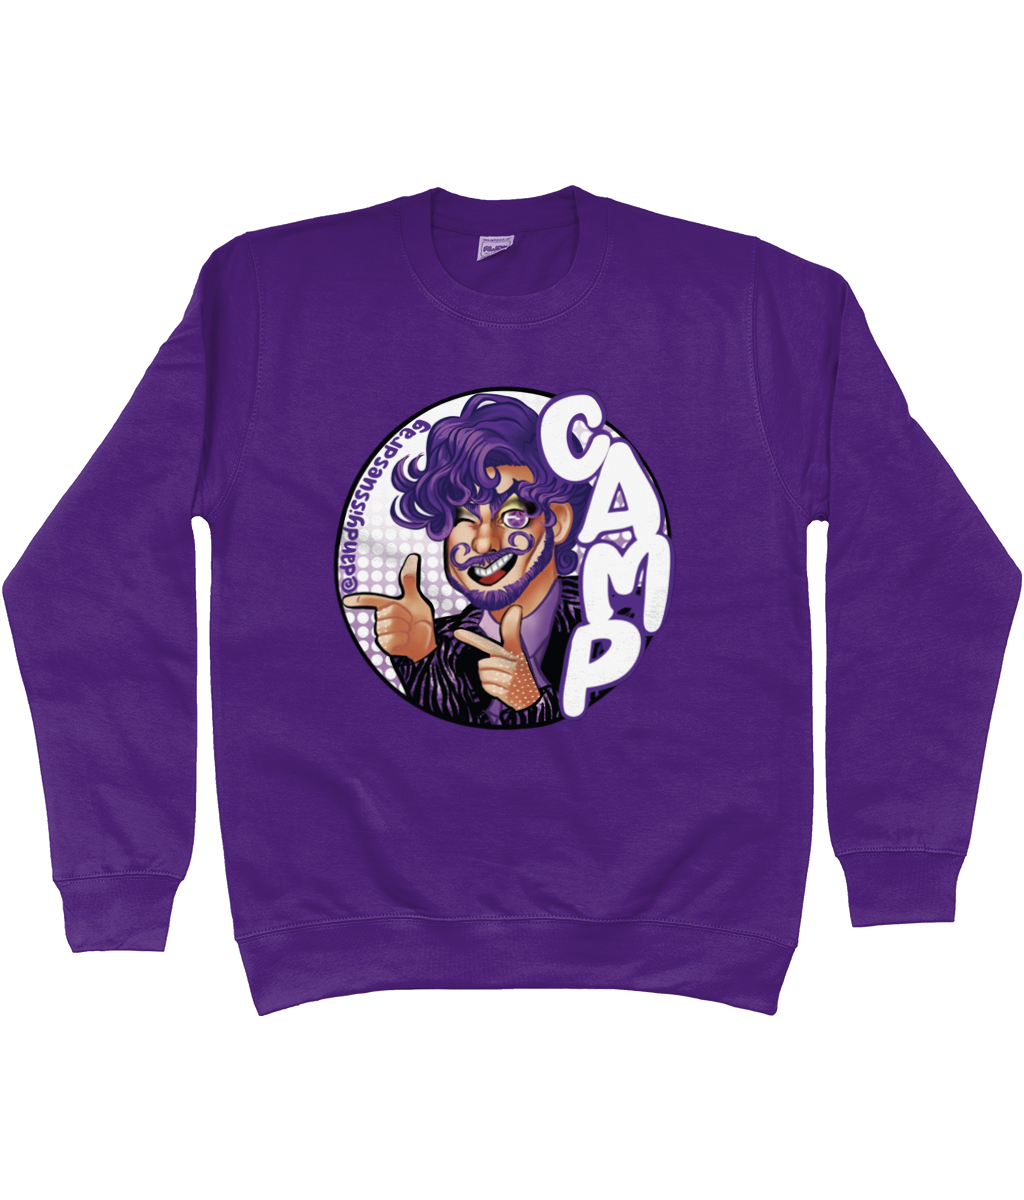 Dandy Issues Purple Camp Sweatshirt